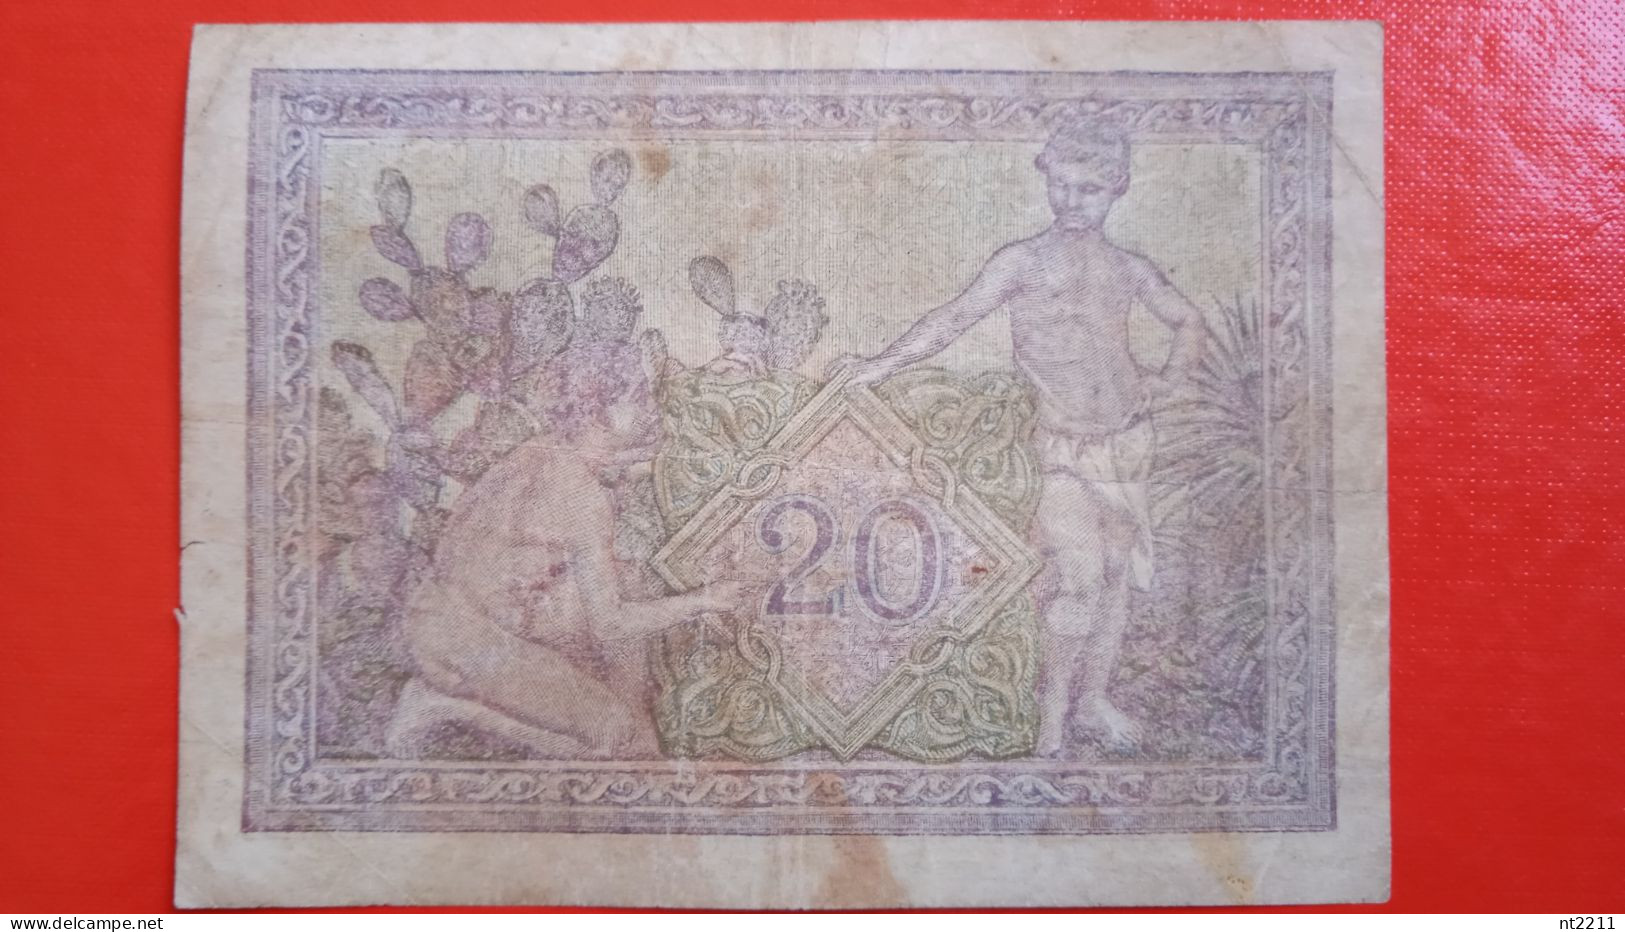 Banknote 20 Francs Algeria 1942 - Algeria